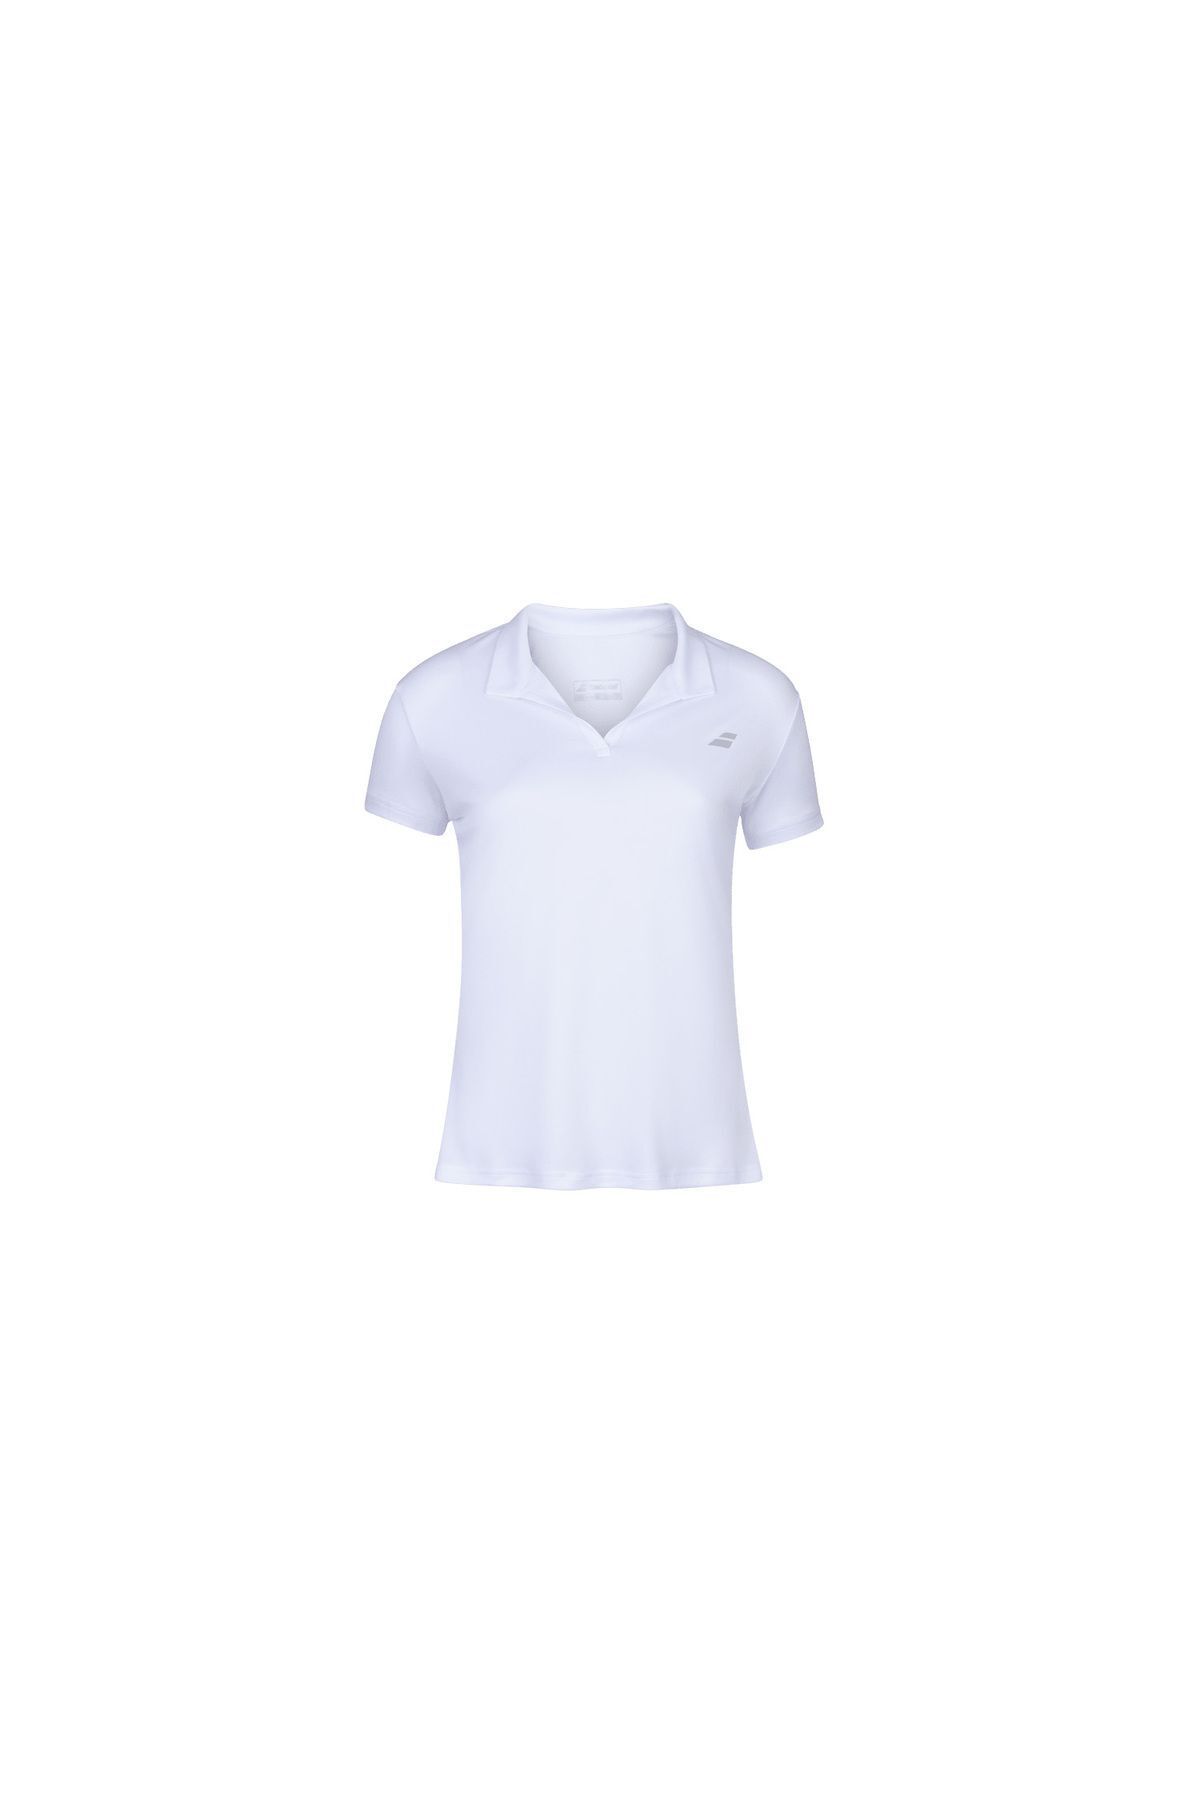 BABOLAT Play Tenis Beyaz Polo Yaka Çocuk T-shirt